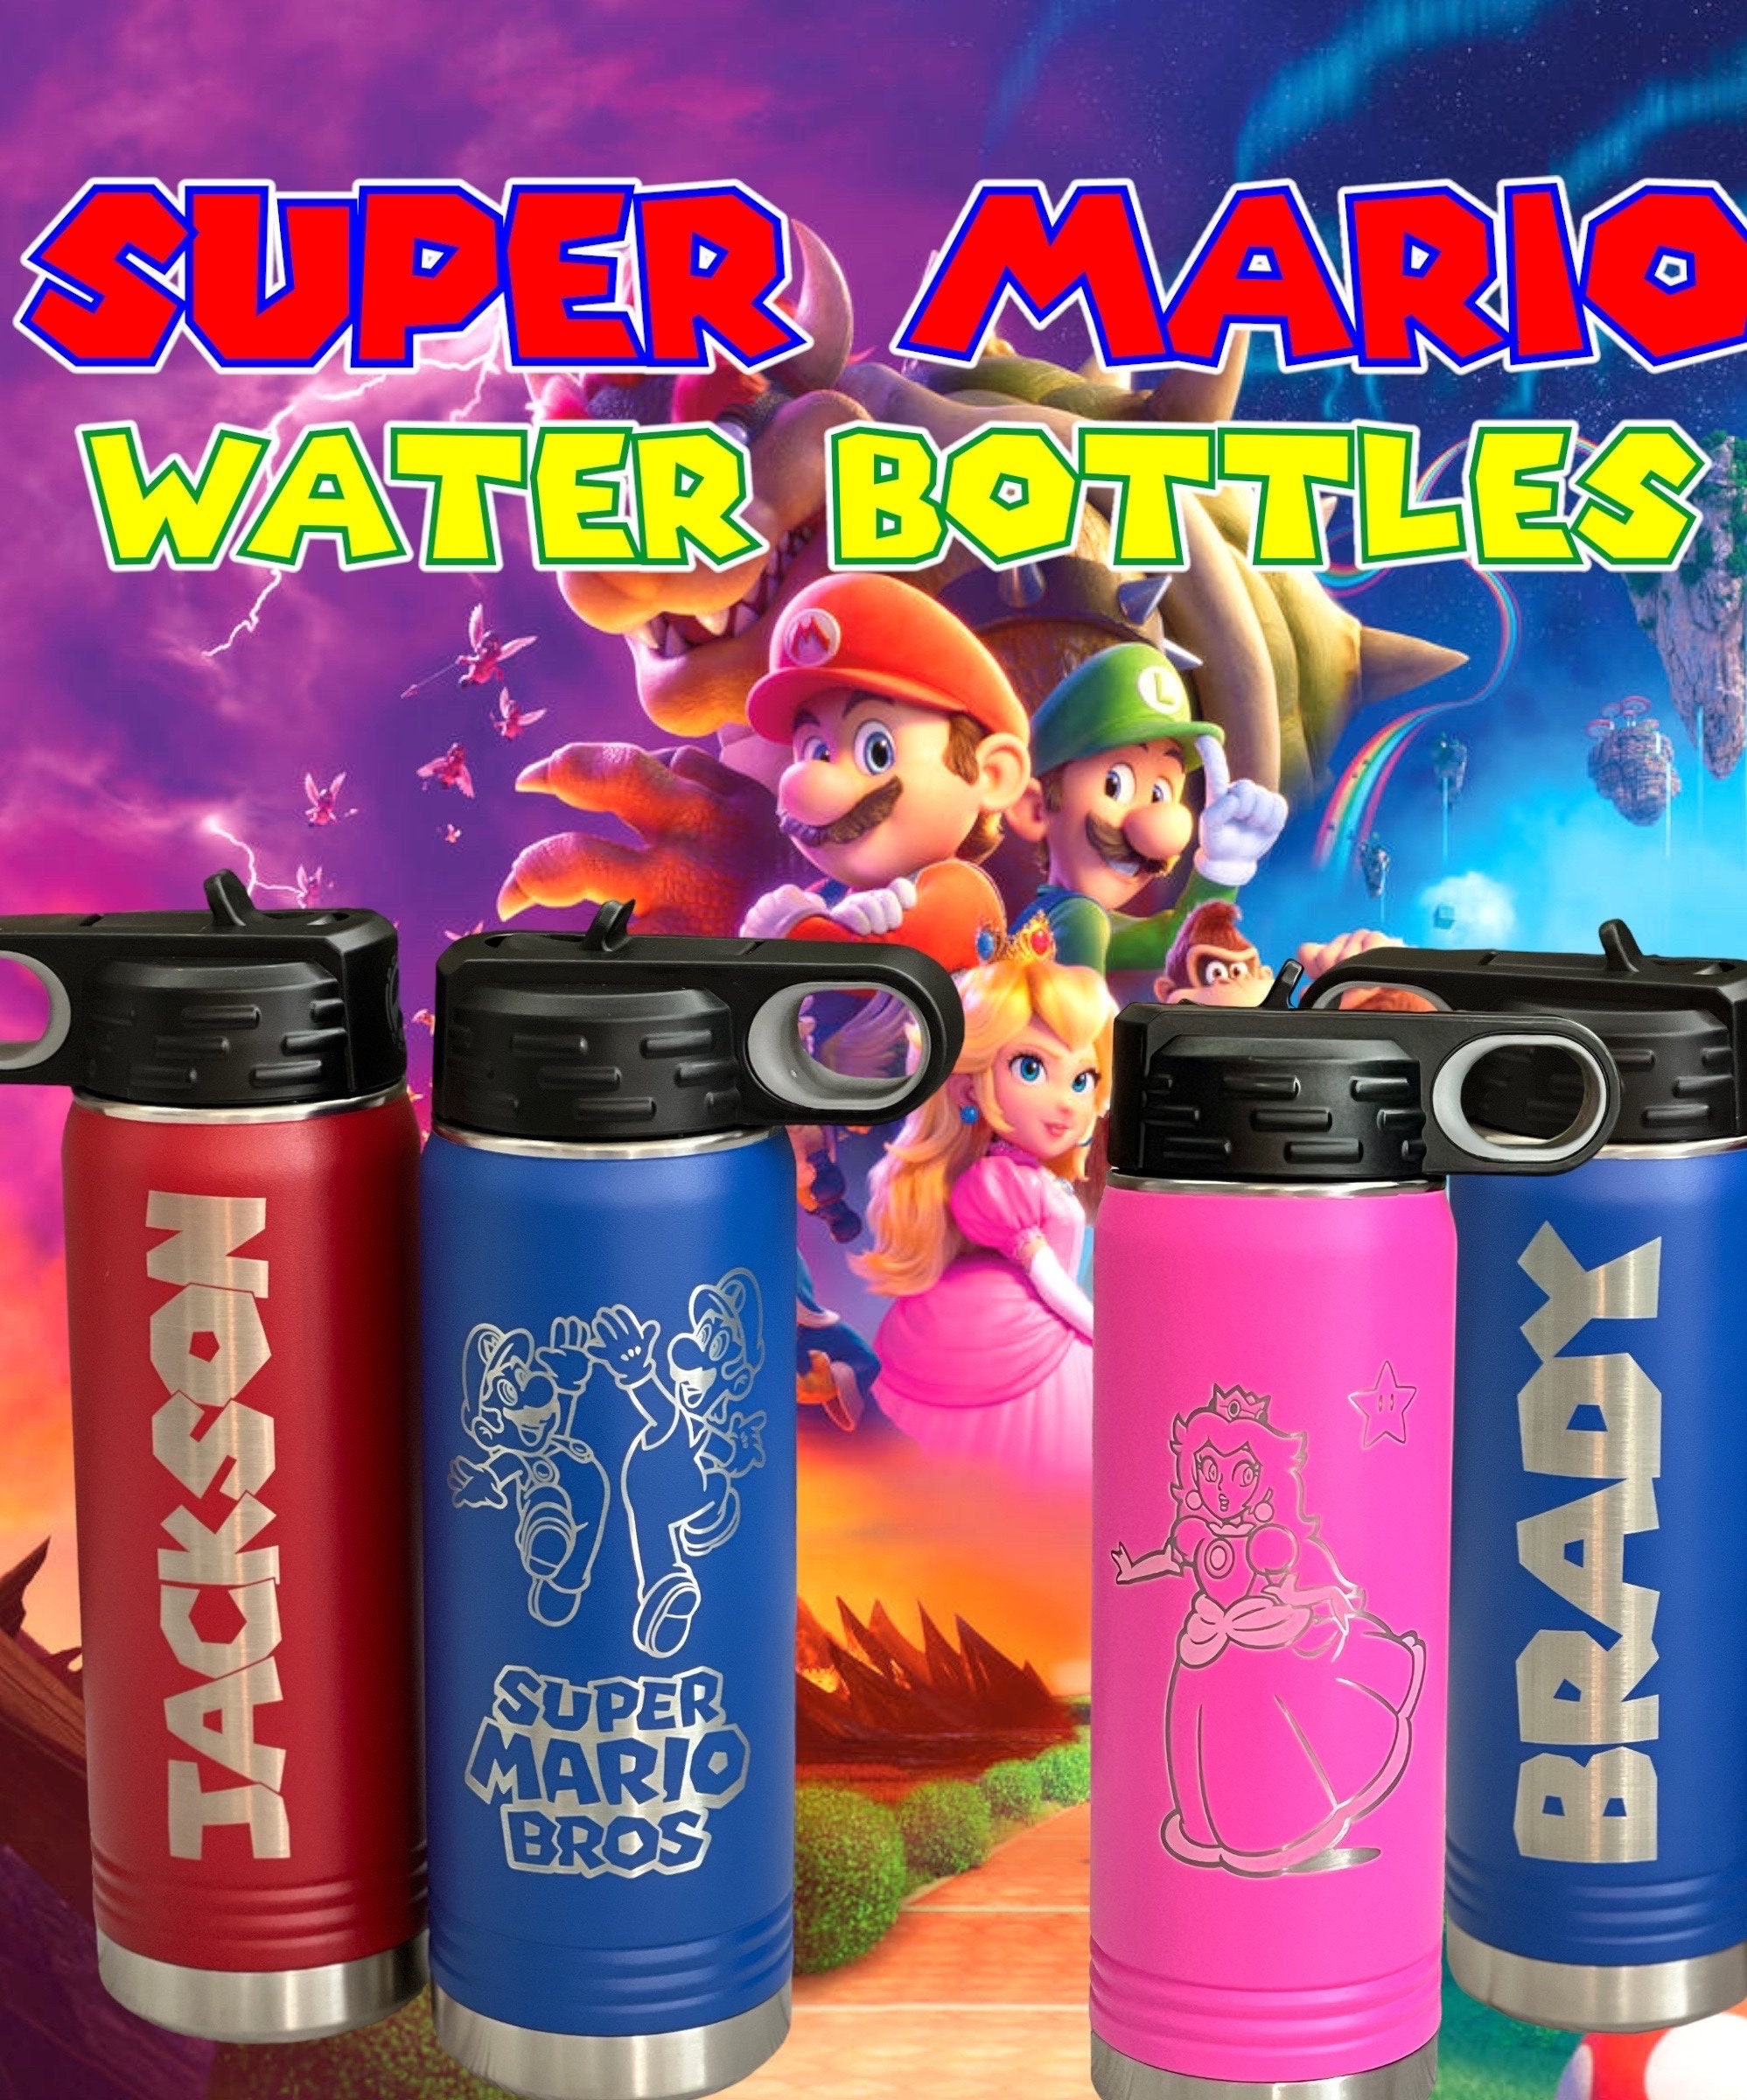 Skater 2way Stainless Steel Water Bottle Super Mario